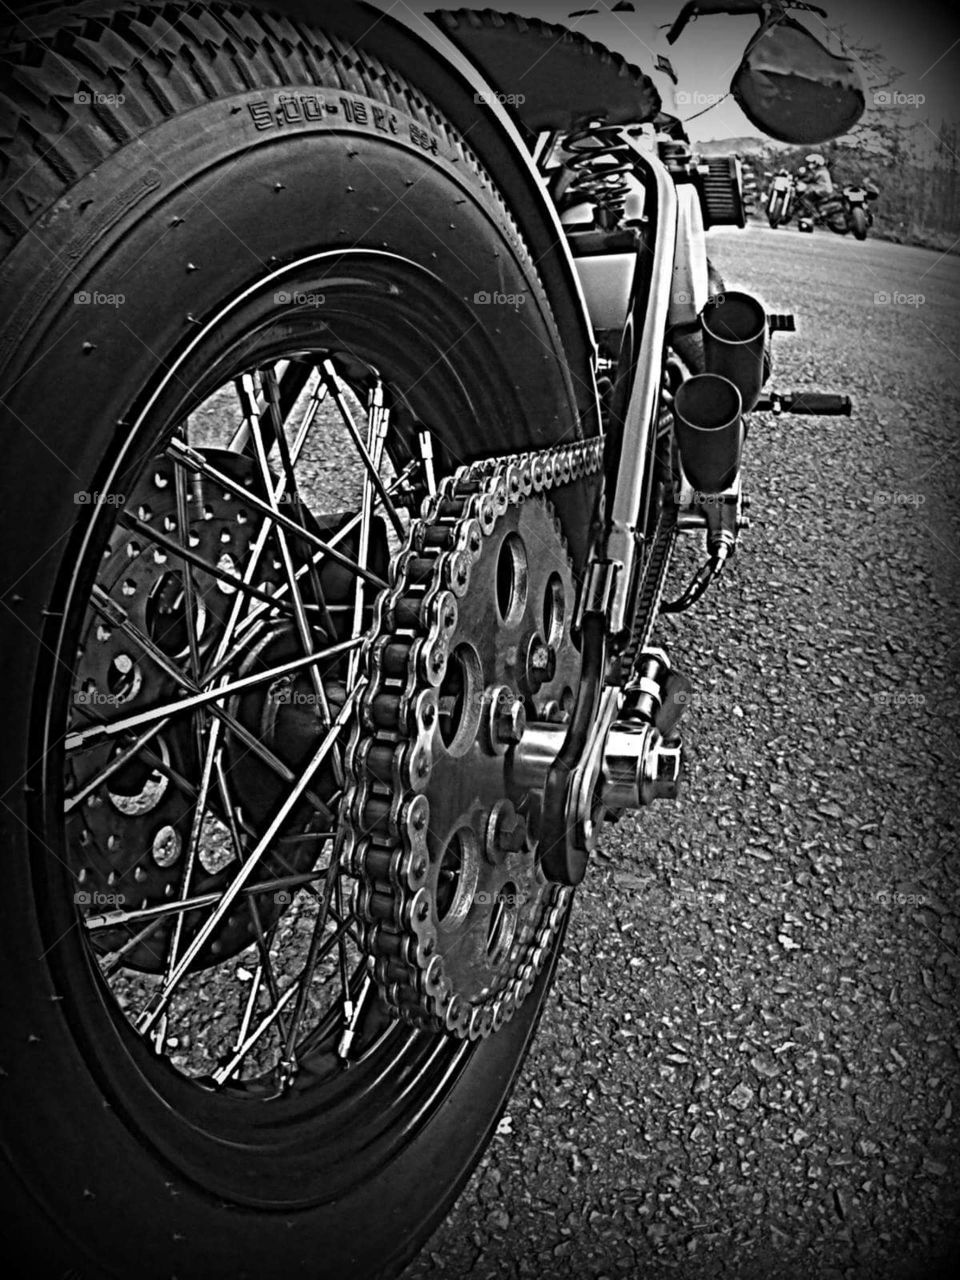 Harley Davidson bobber motorcycle